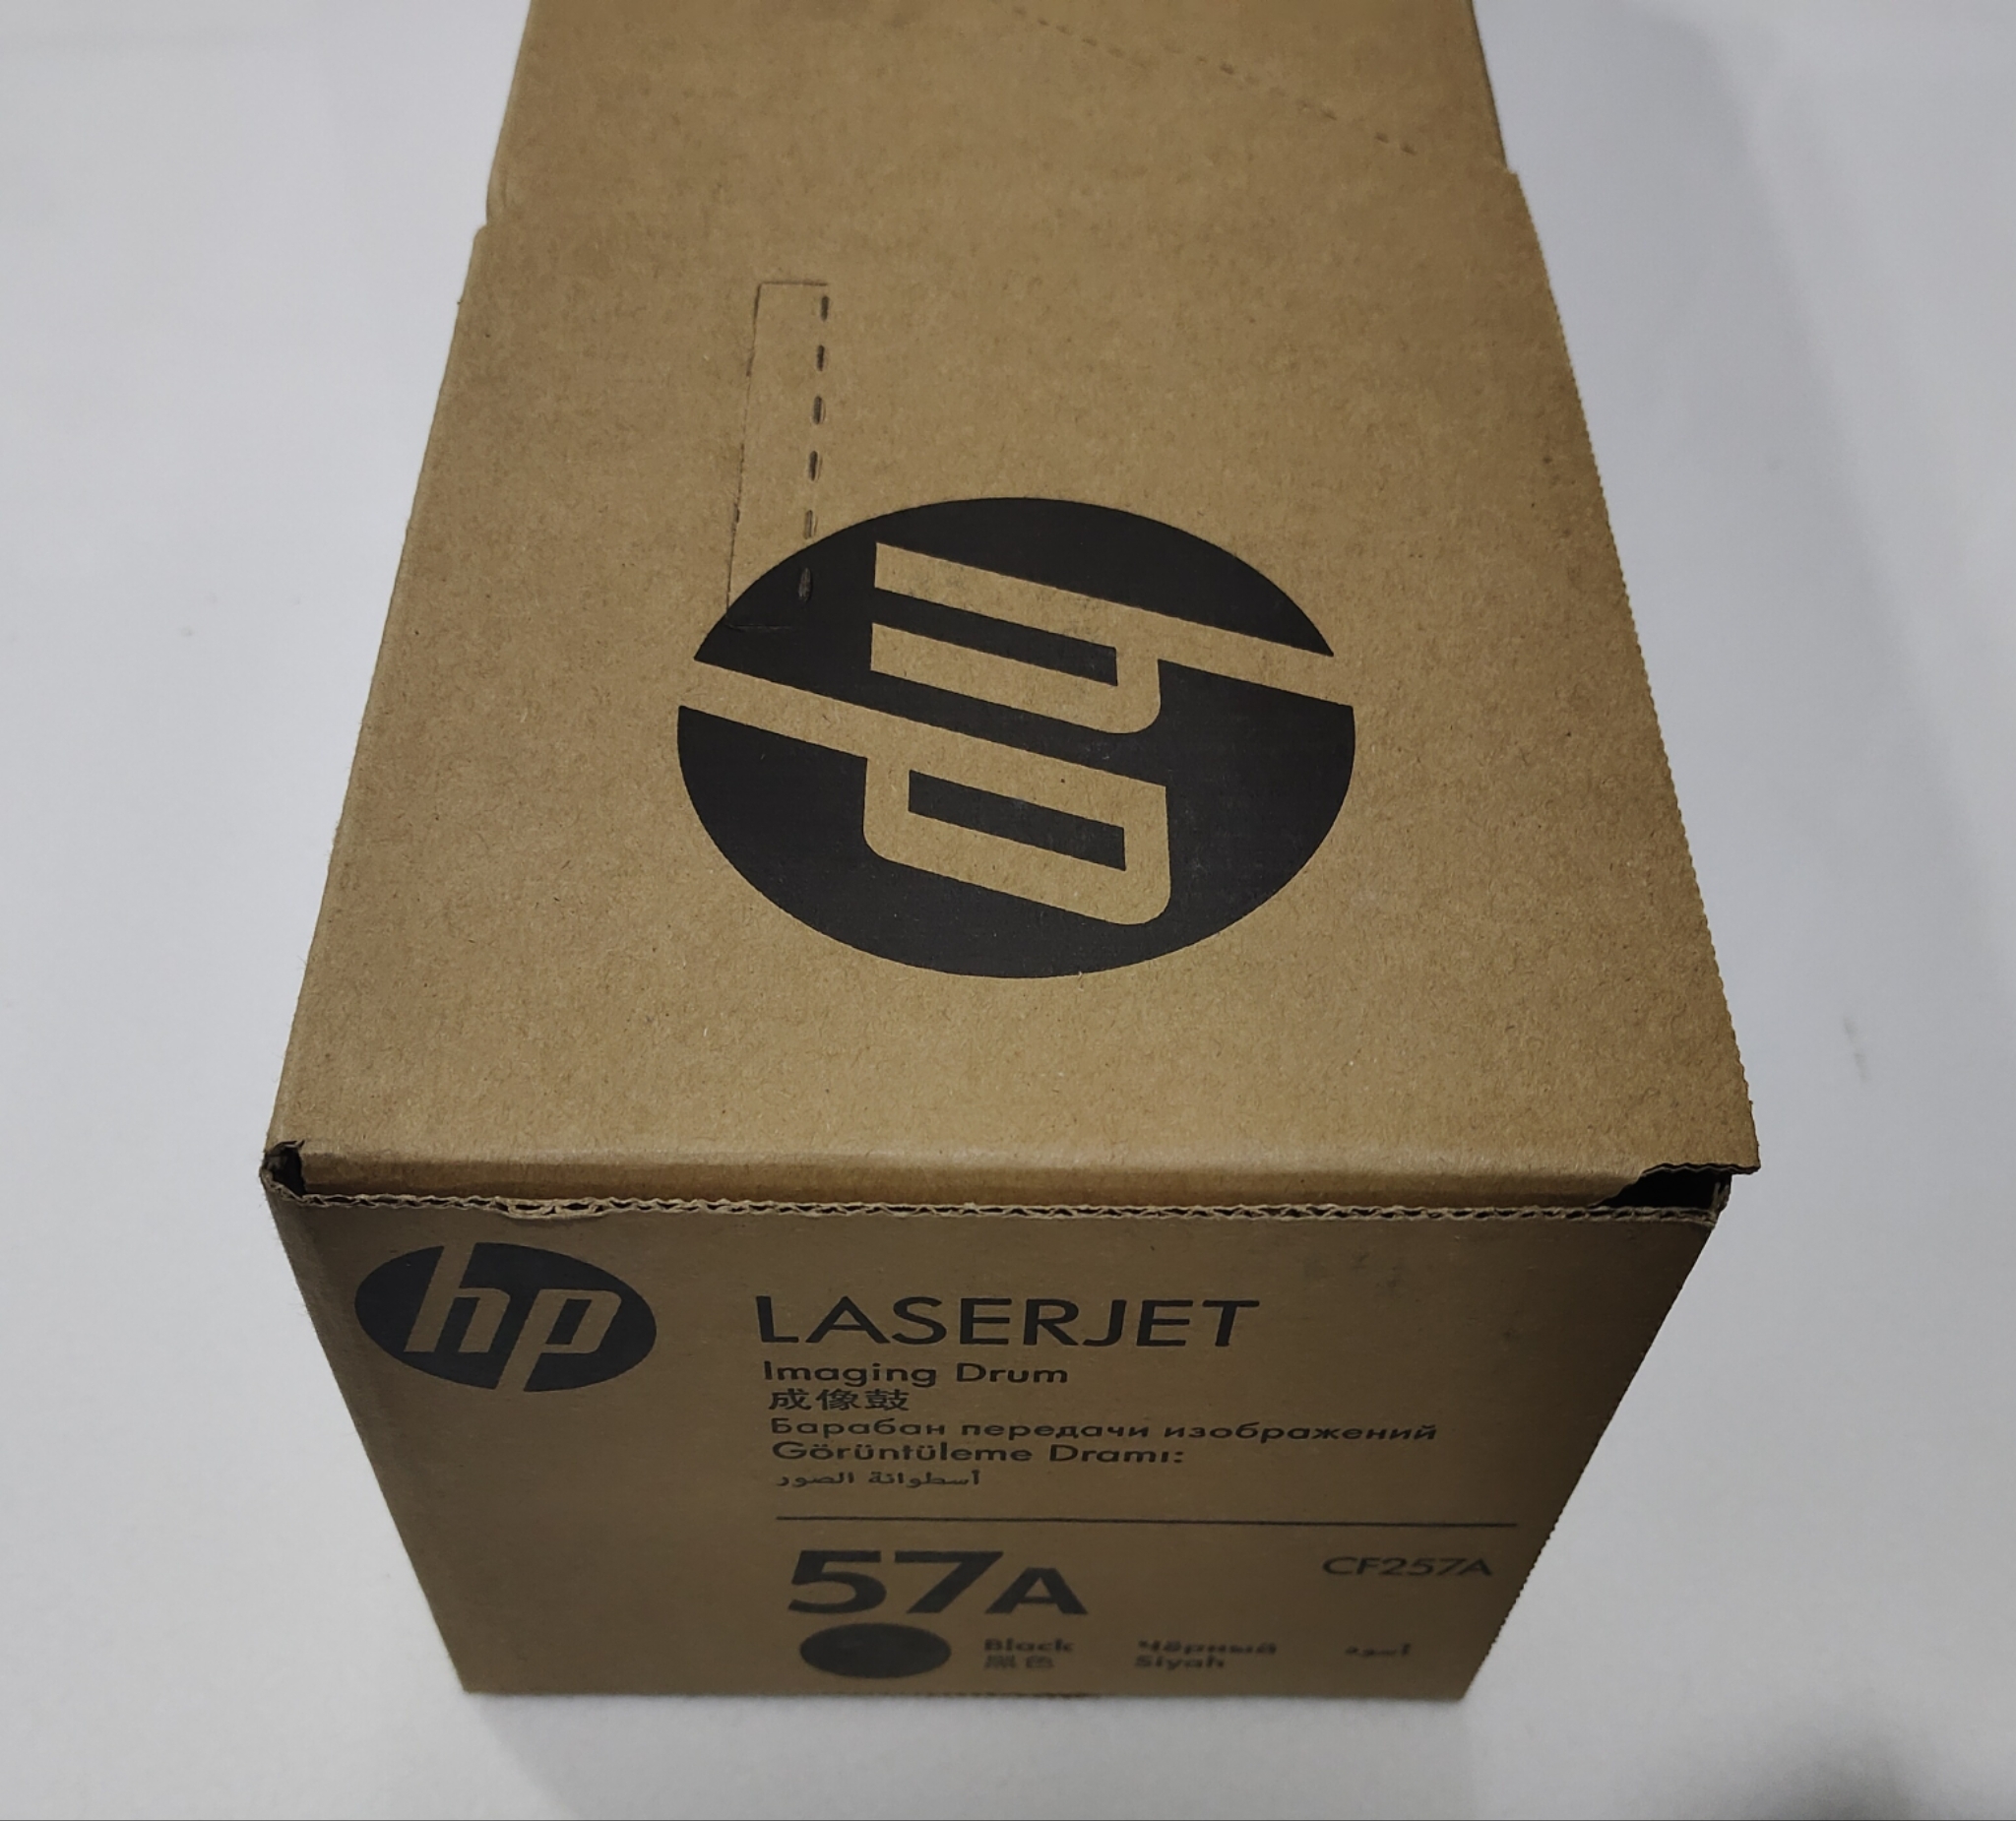 HP 57A LaserJet Imaging Drum – Rs.6450 – LT Online Store